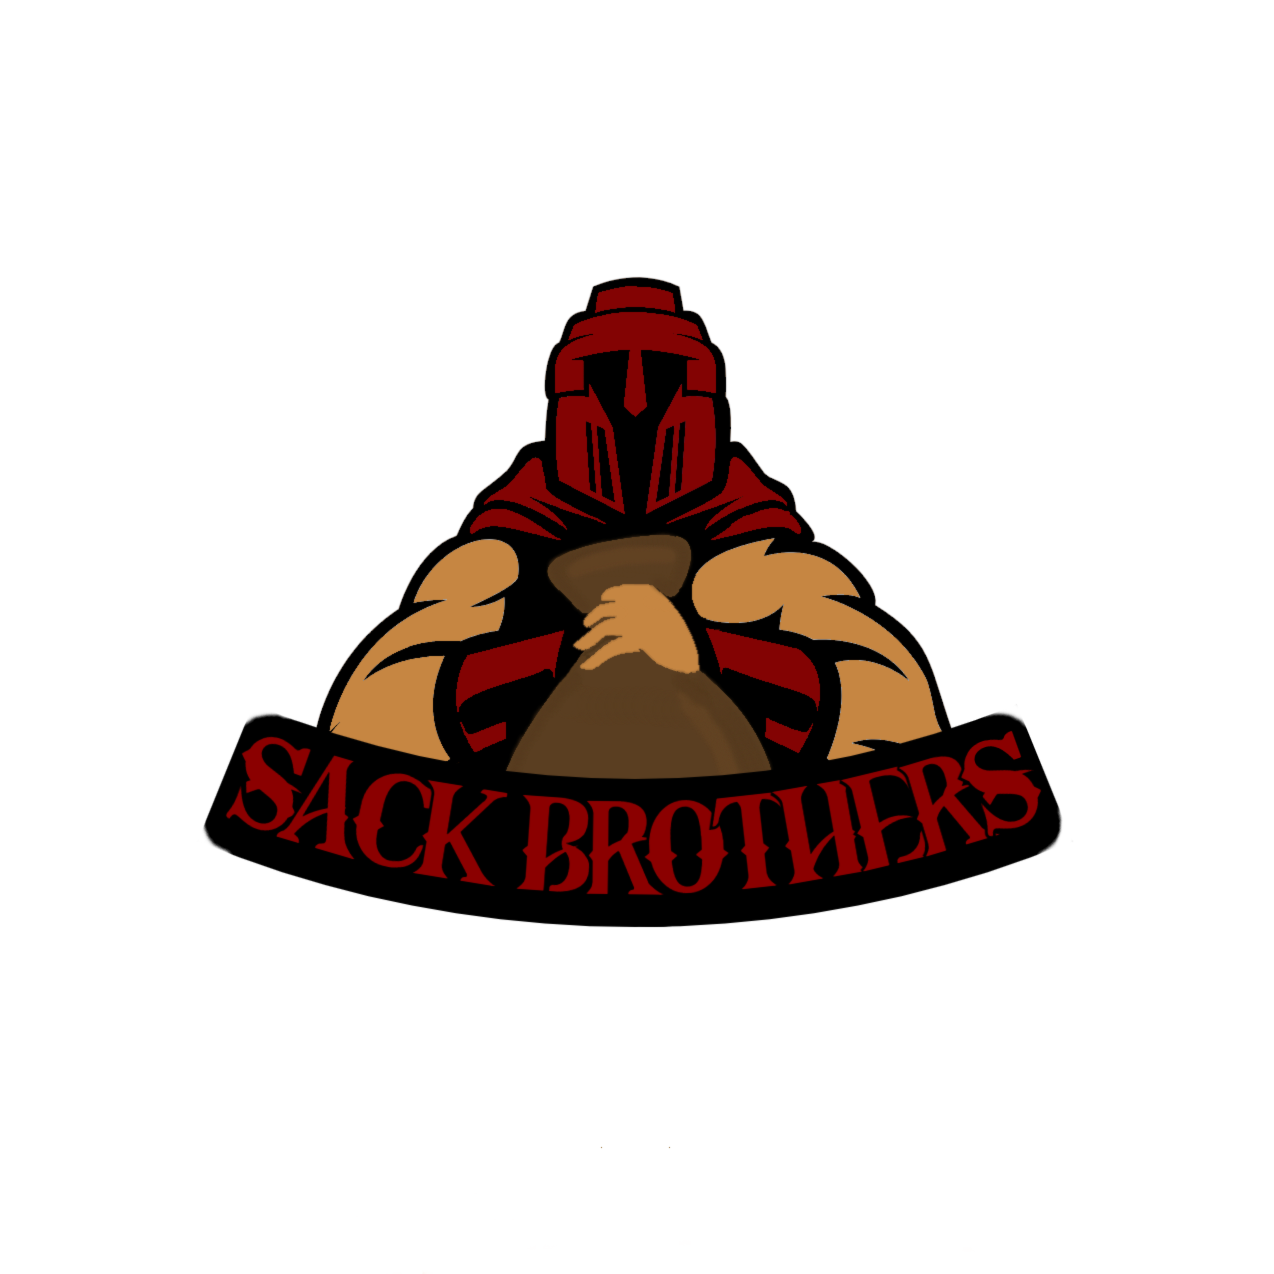 Sack Brothers